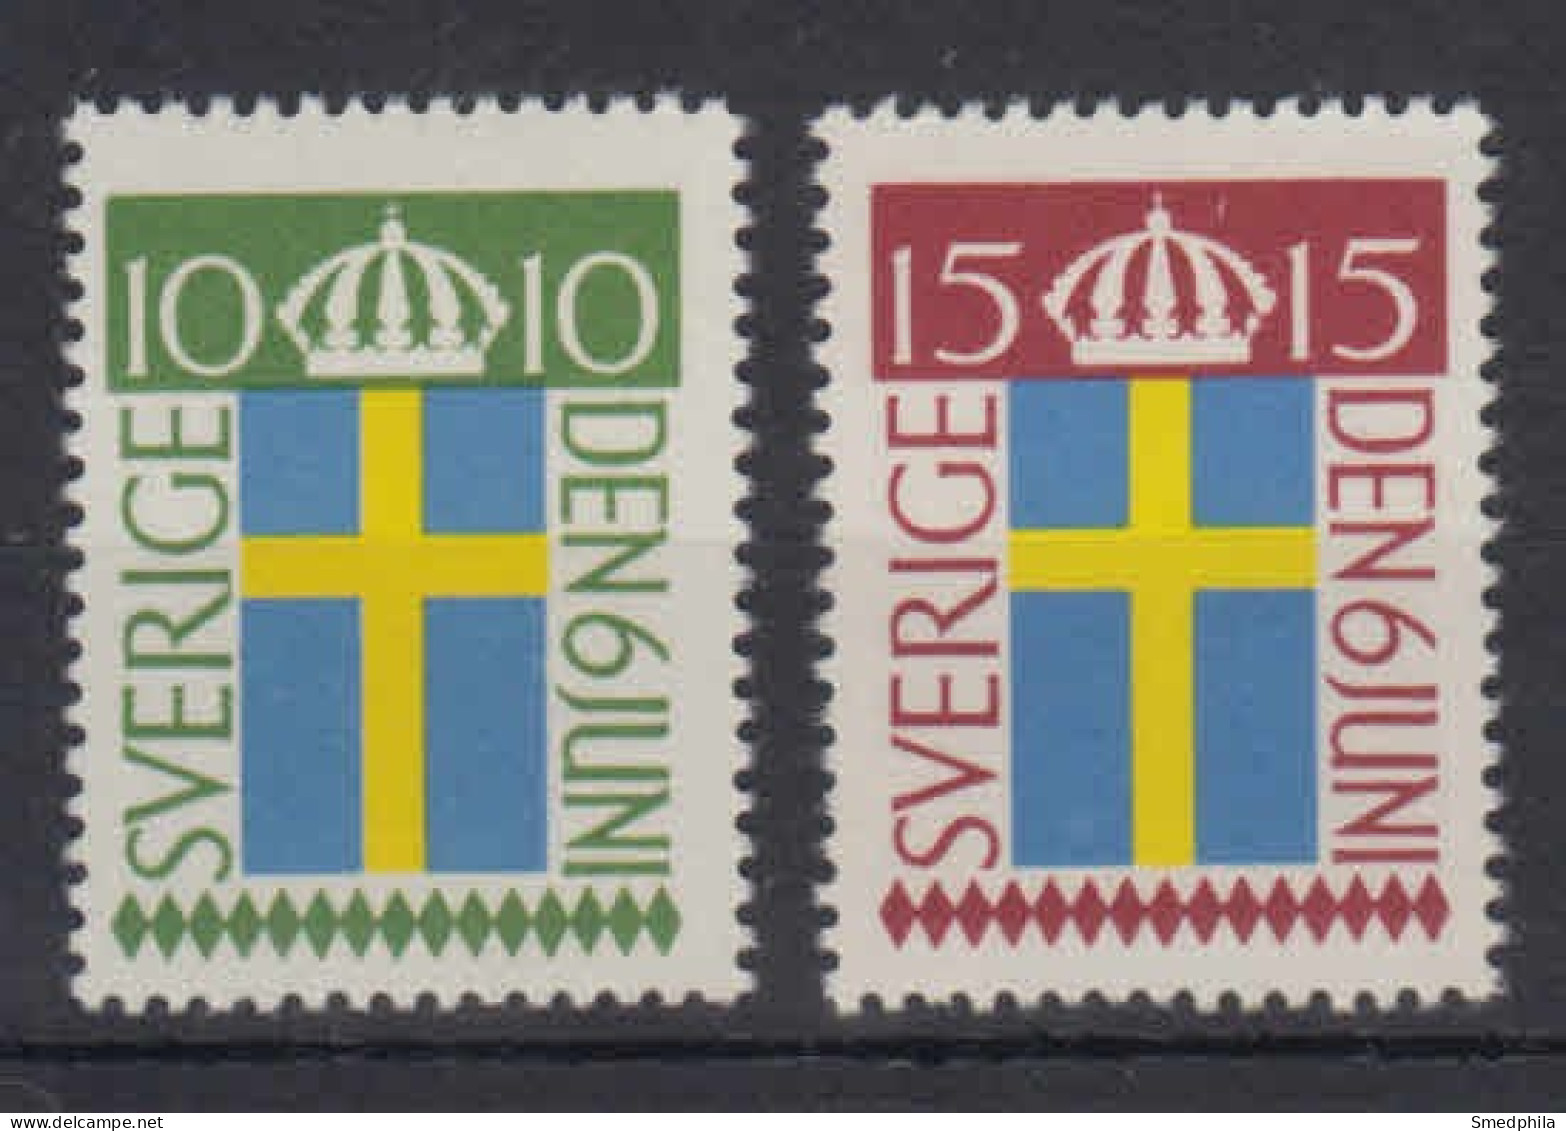 Sweden 1955 - Michel 404-405 MNH ** - Nuovi